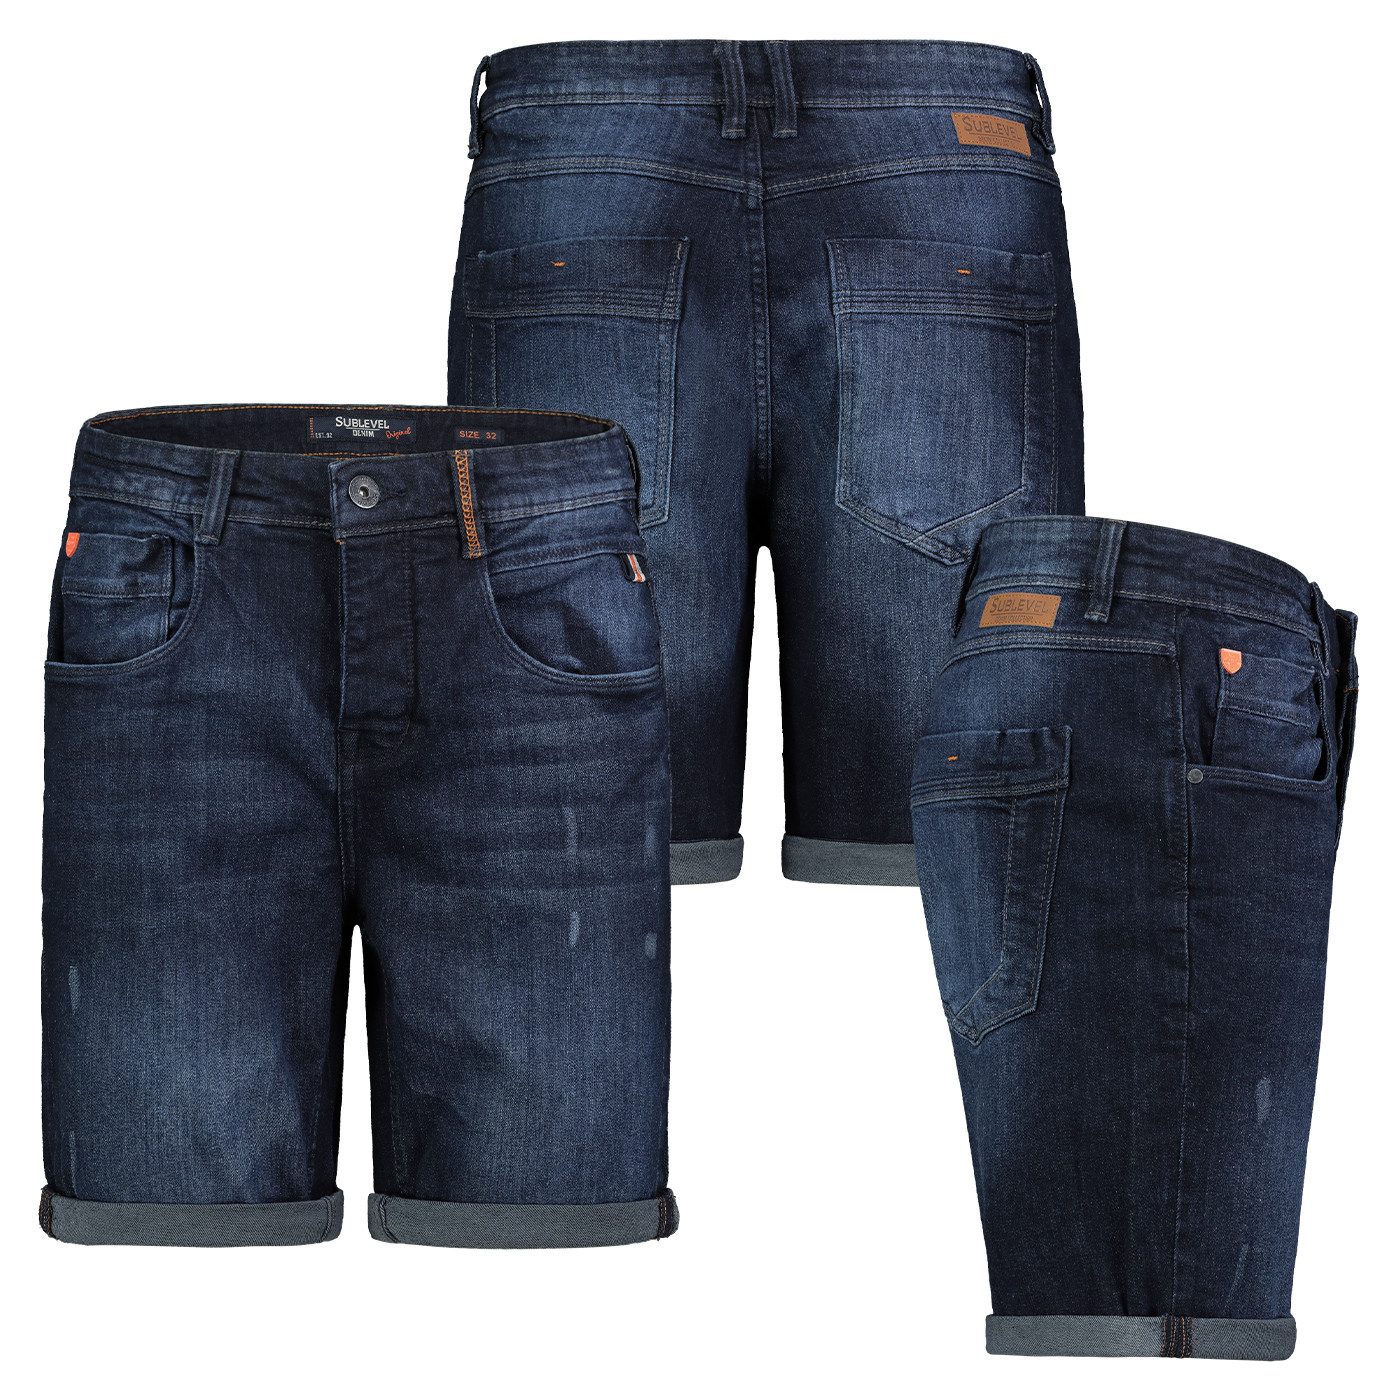 SUBLEVEL Bermudas Herren Jeans Short Freizeit Bermuda kurze Hose Jeans Denim Shorts